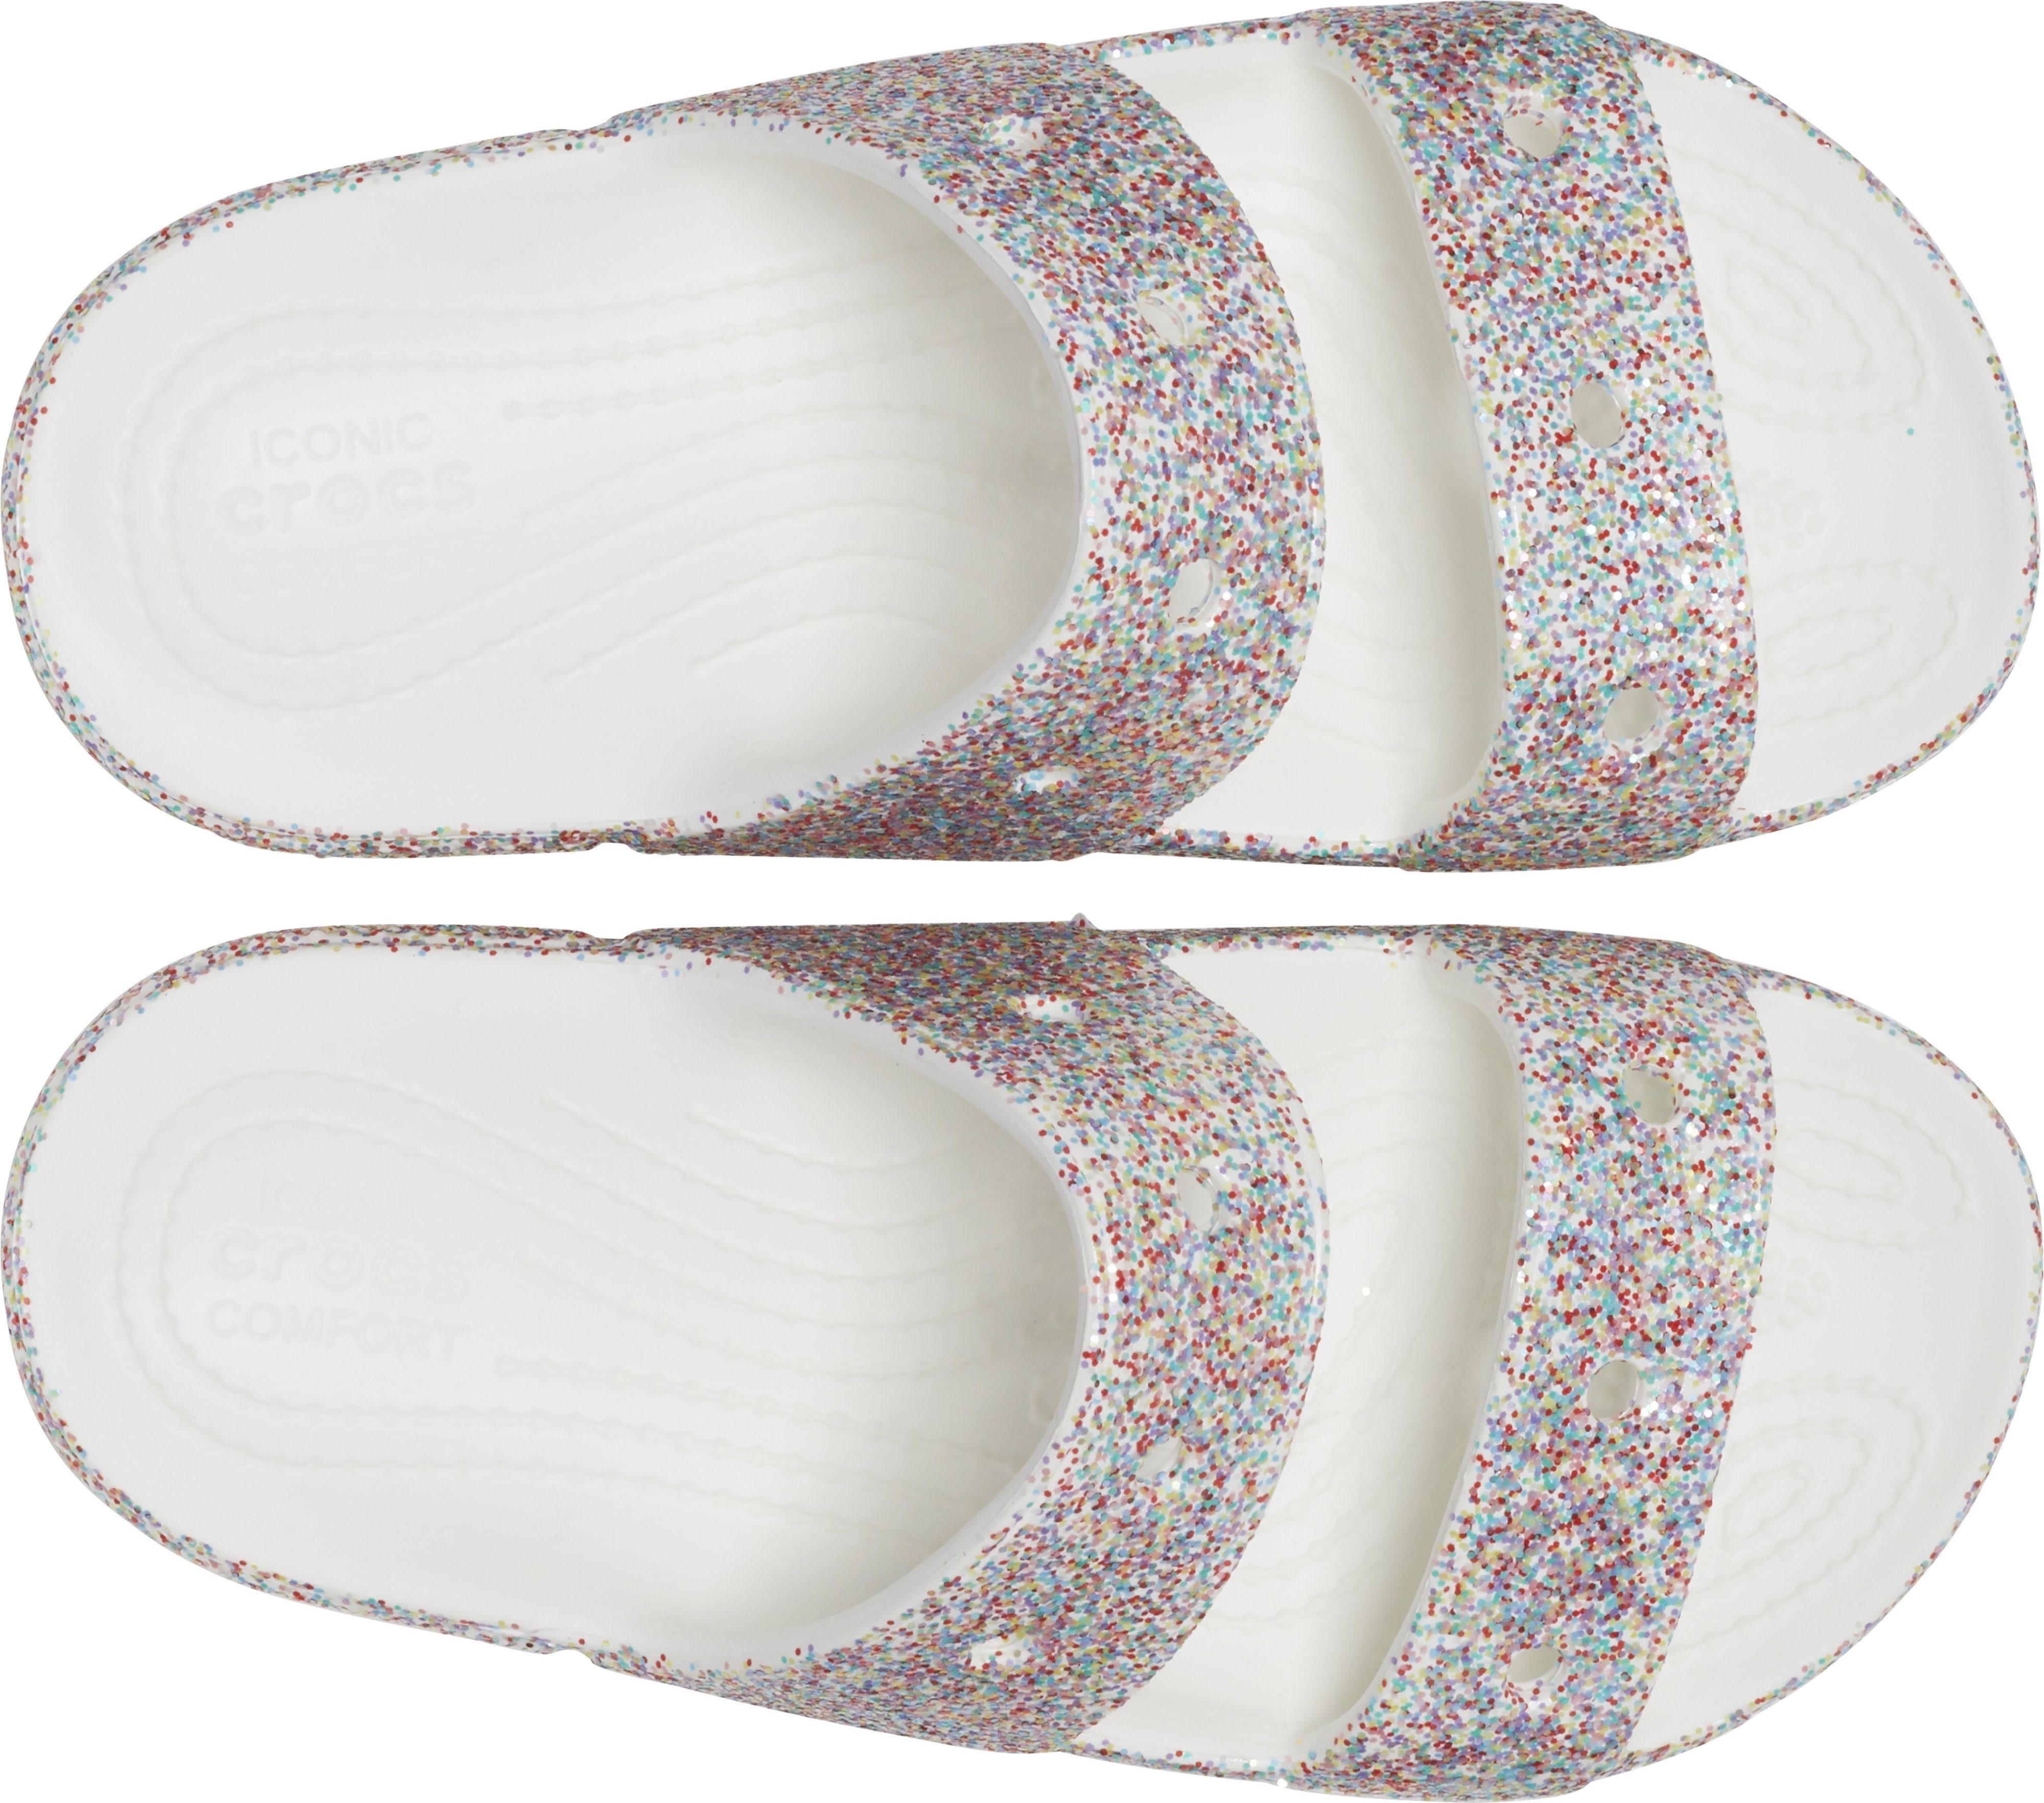 Crocs Classic Sprinkle Glitter Innensohle Sandal K weich Pantolette mit genoppter